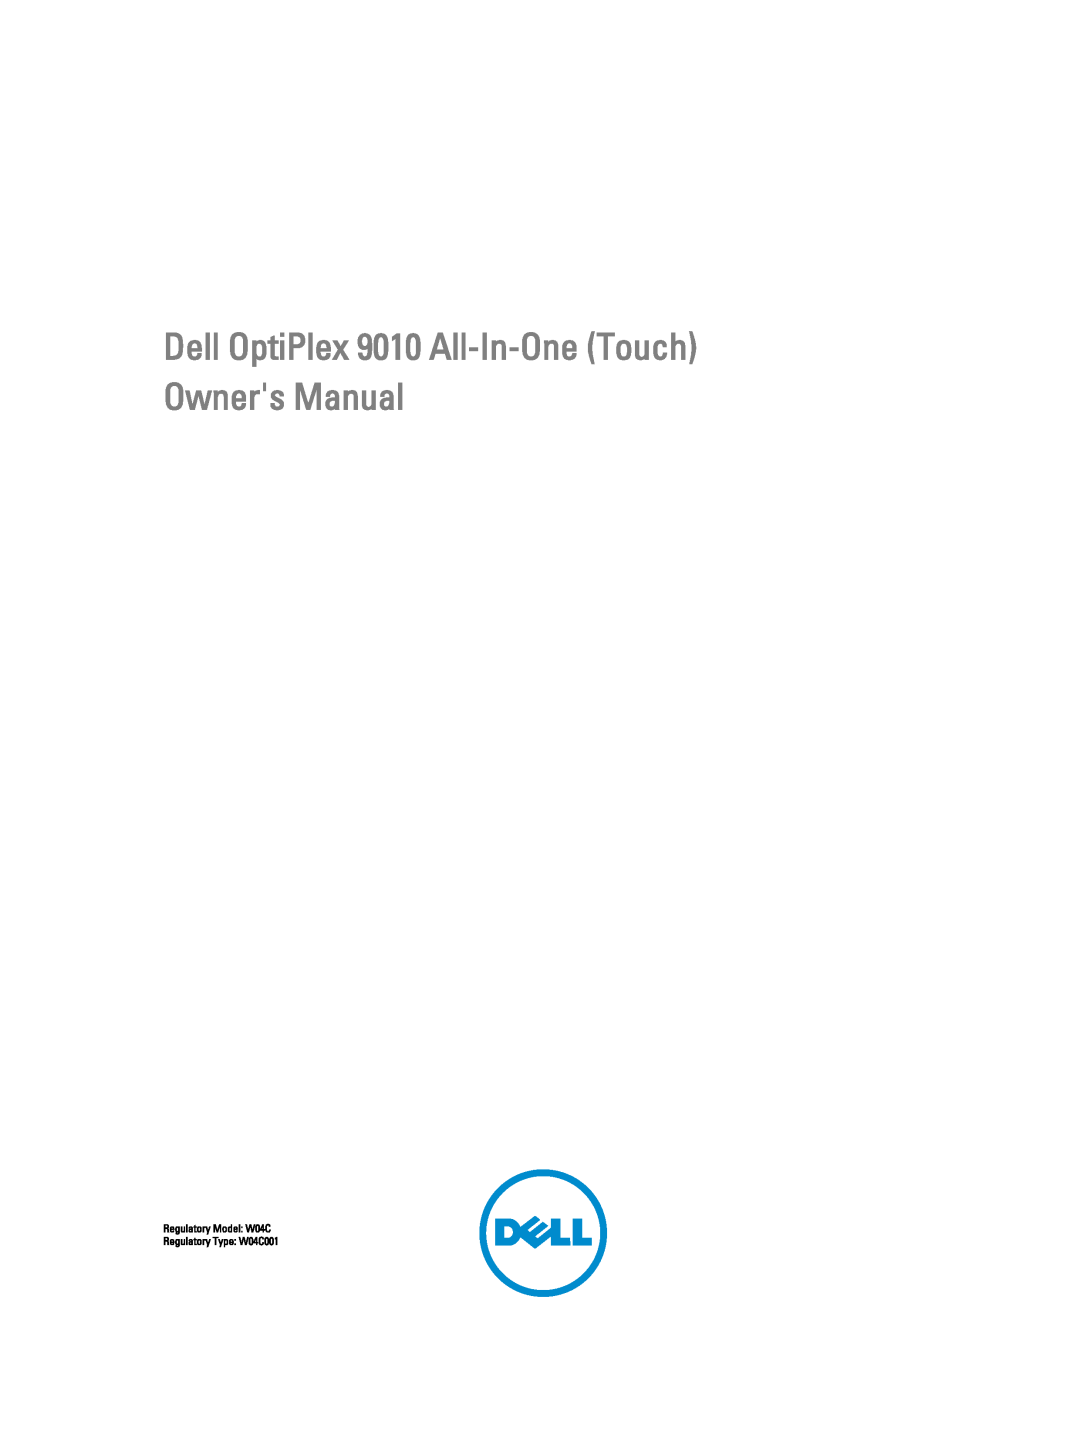 Dell owner manual Regulatory Model W04C Regulatory Type W04C002 